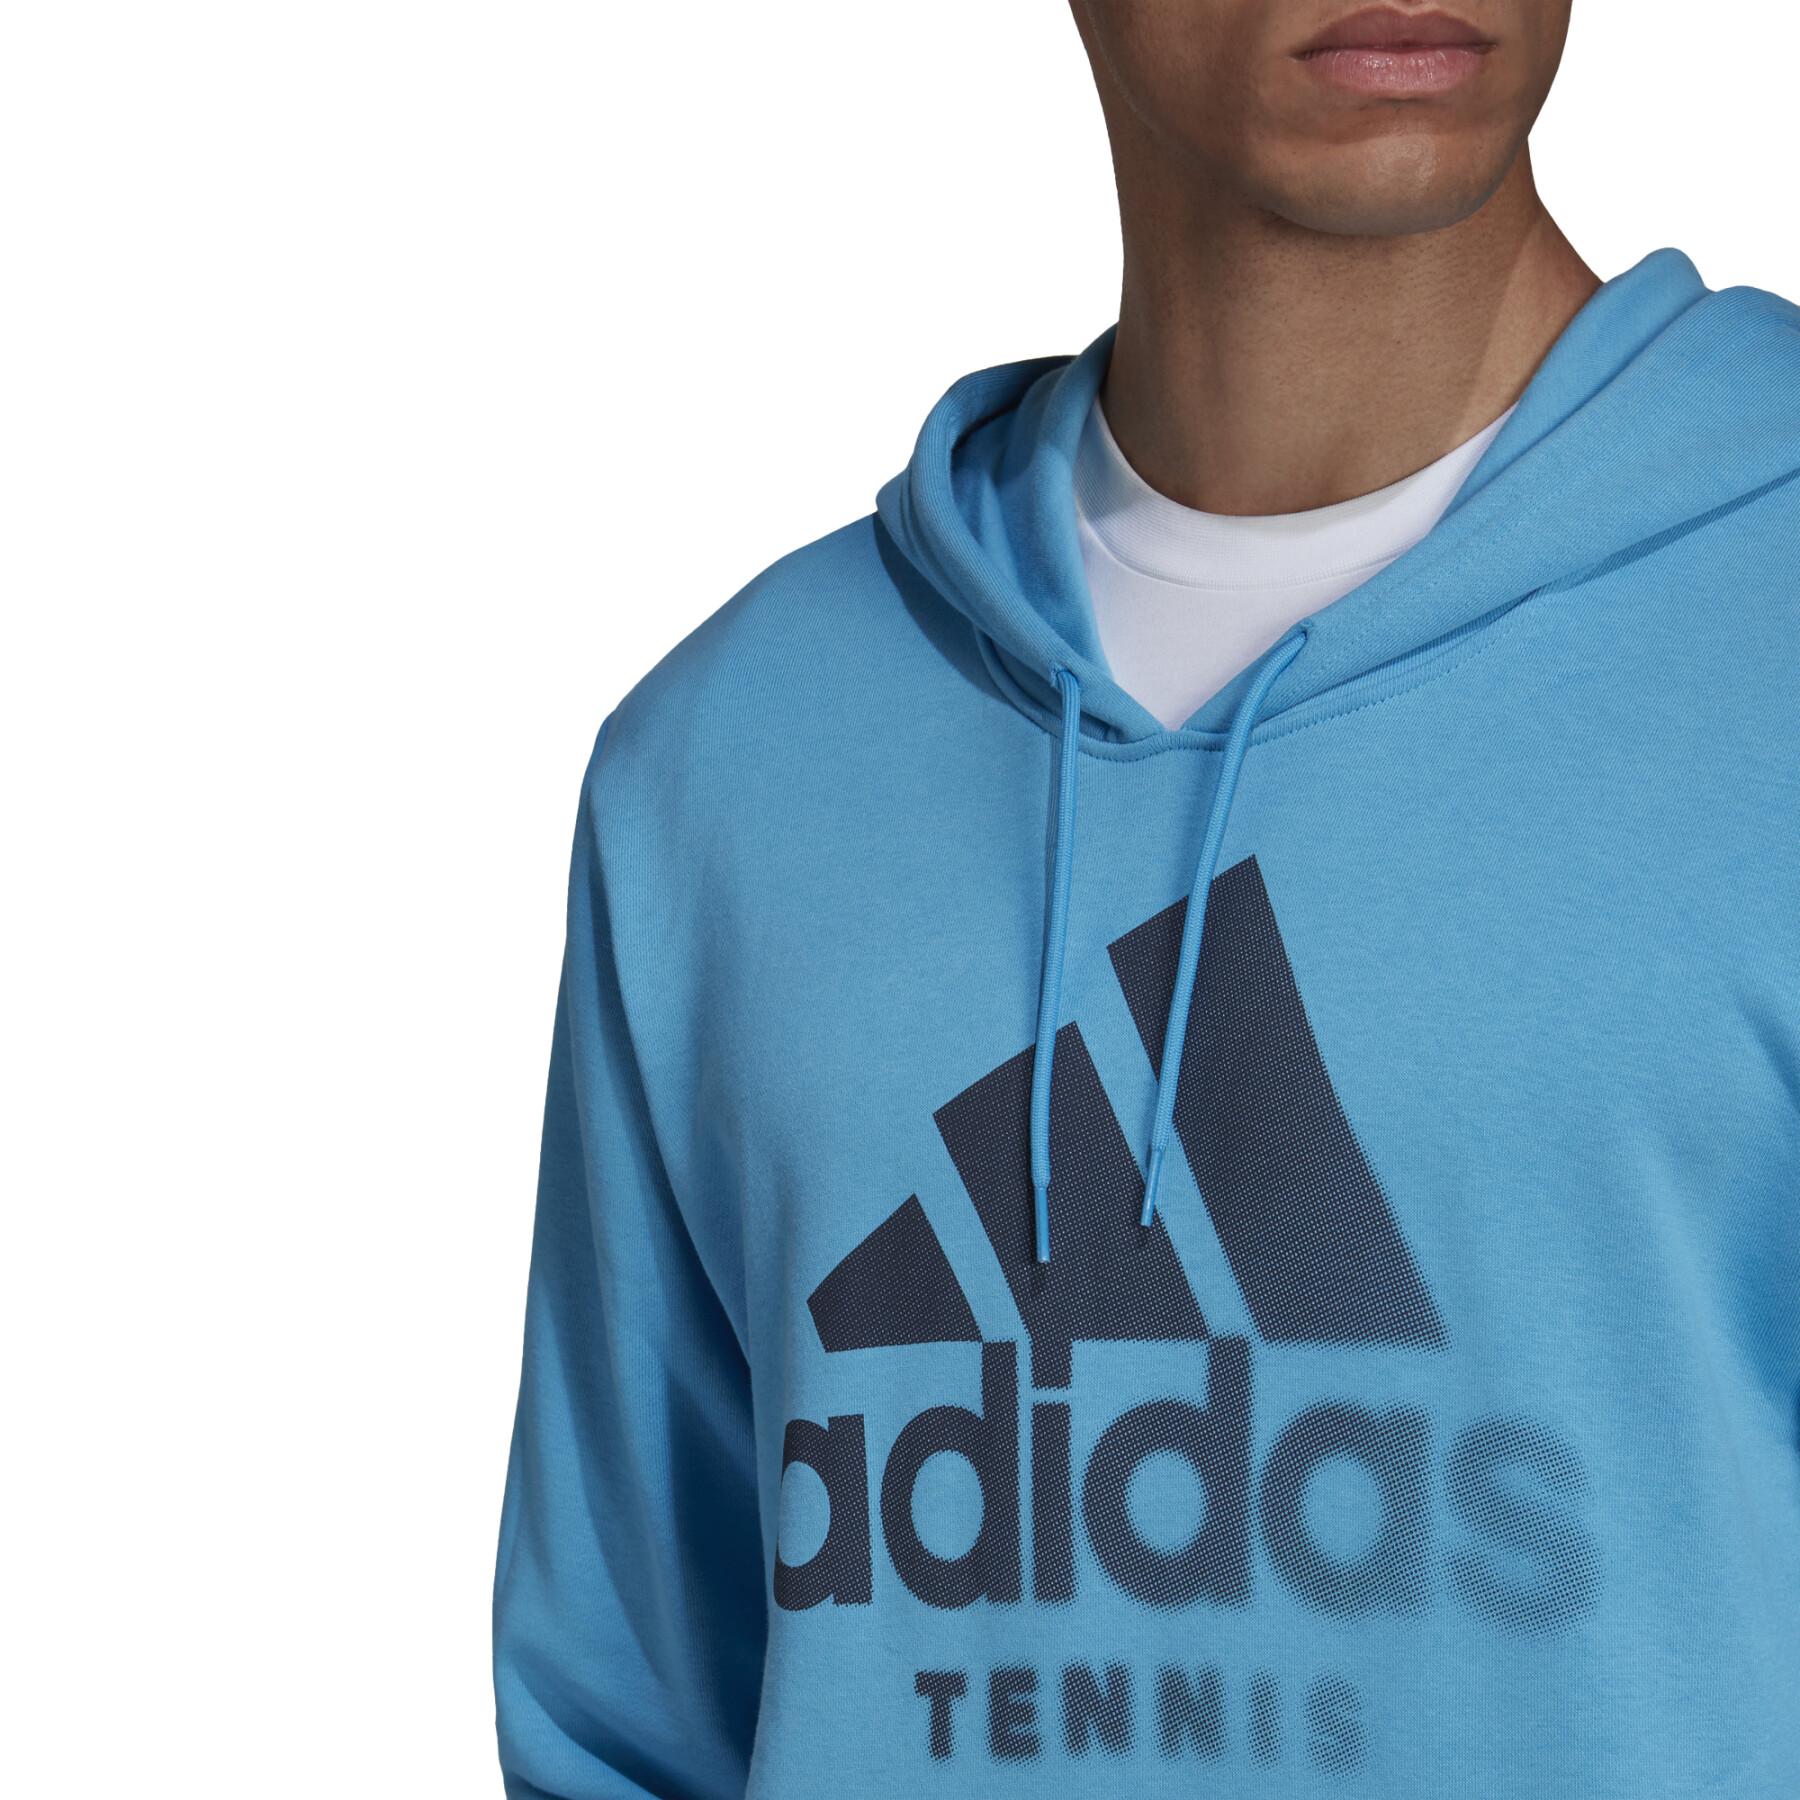 Hooded sweatshirt adidas Tennis Graphic